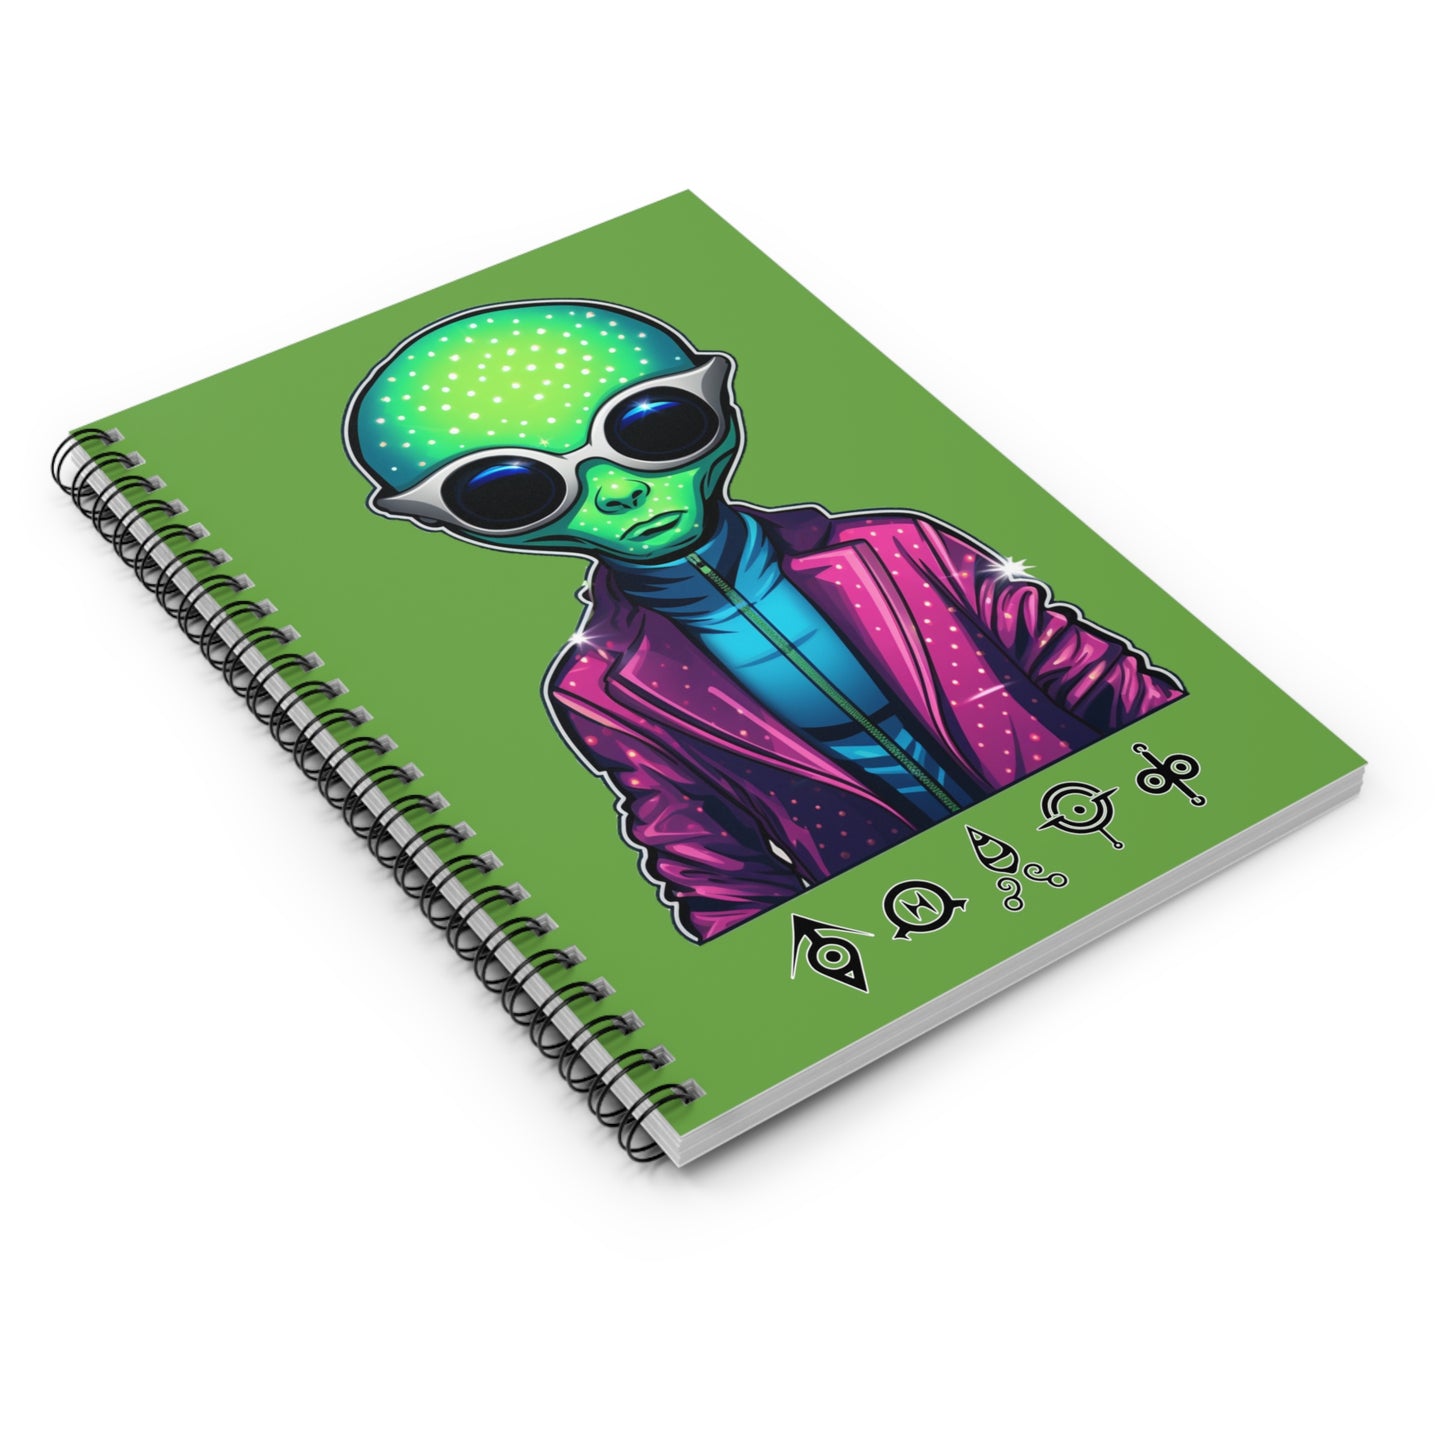 Disco Invasion | Spiral Notebook - Ruled Line